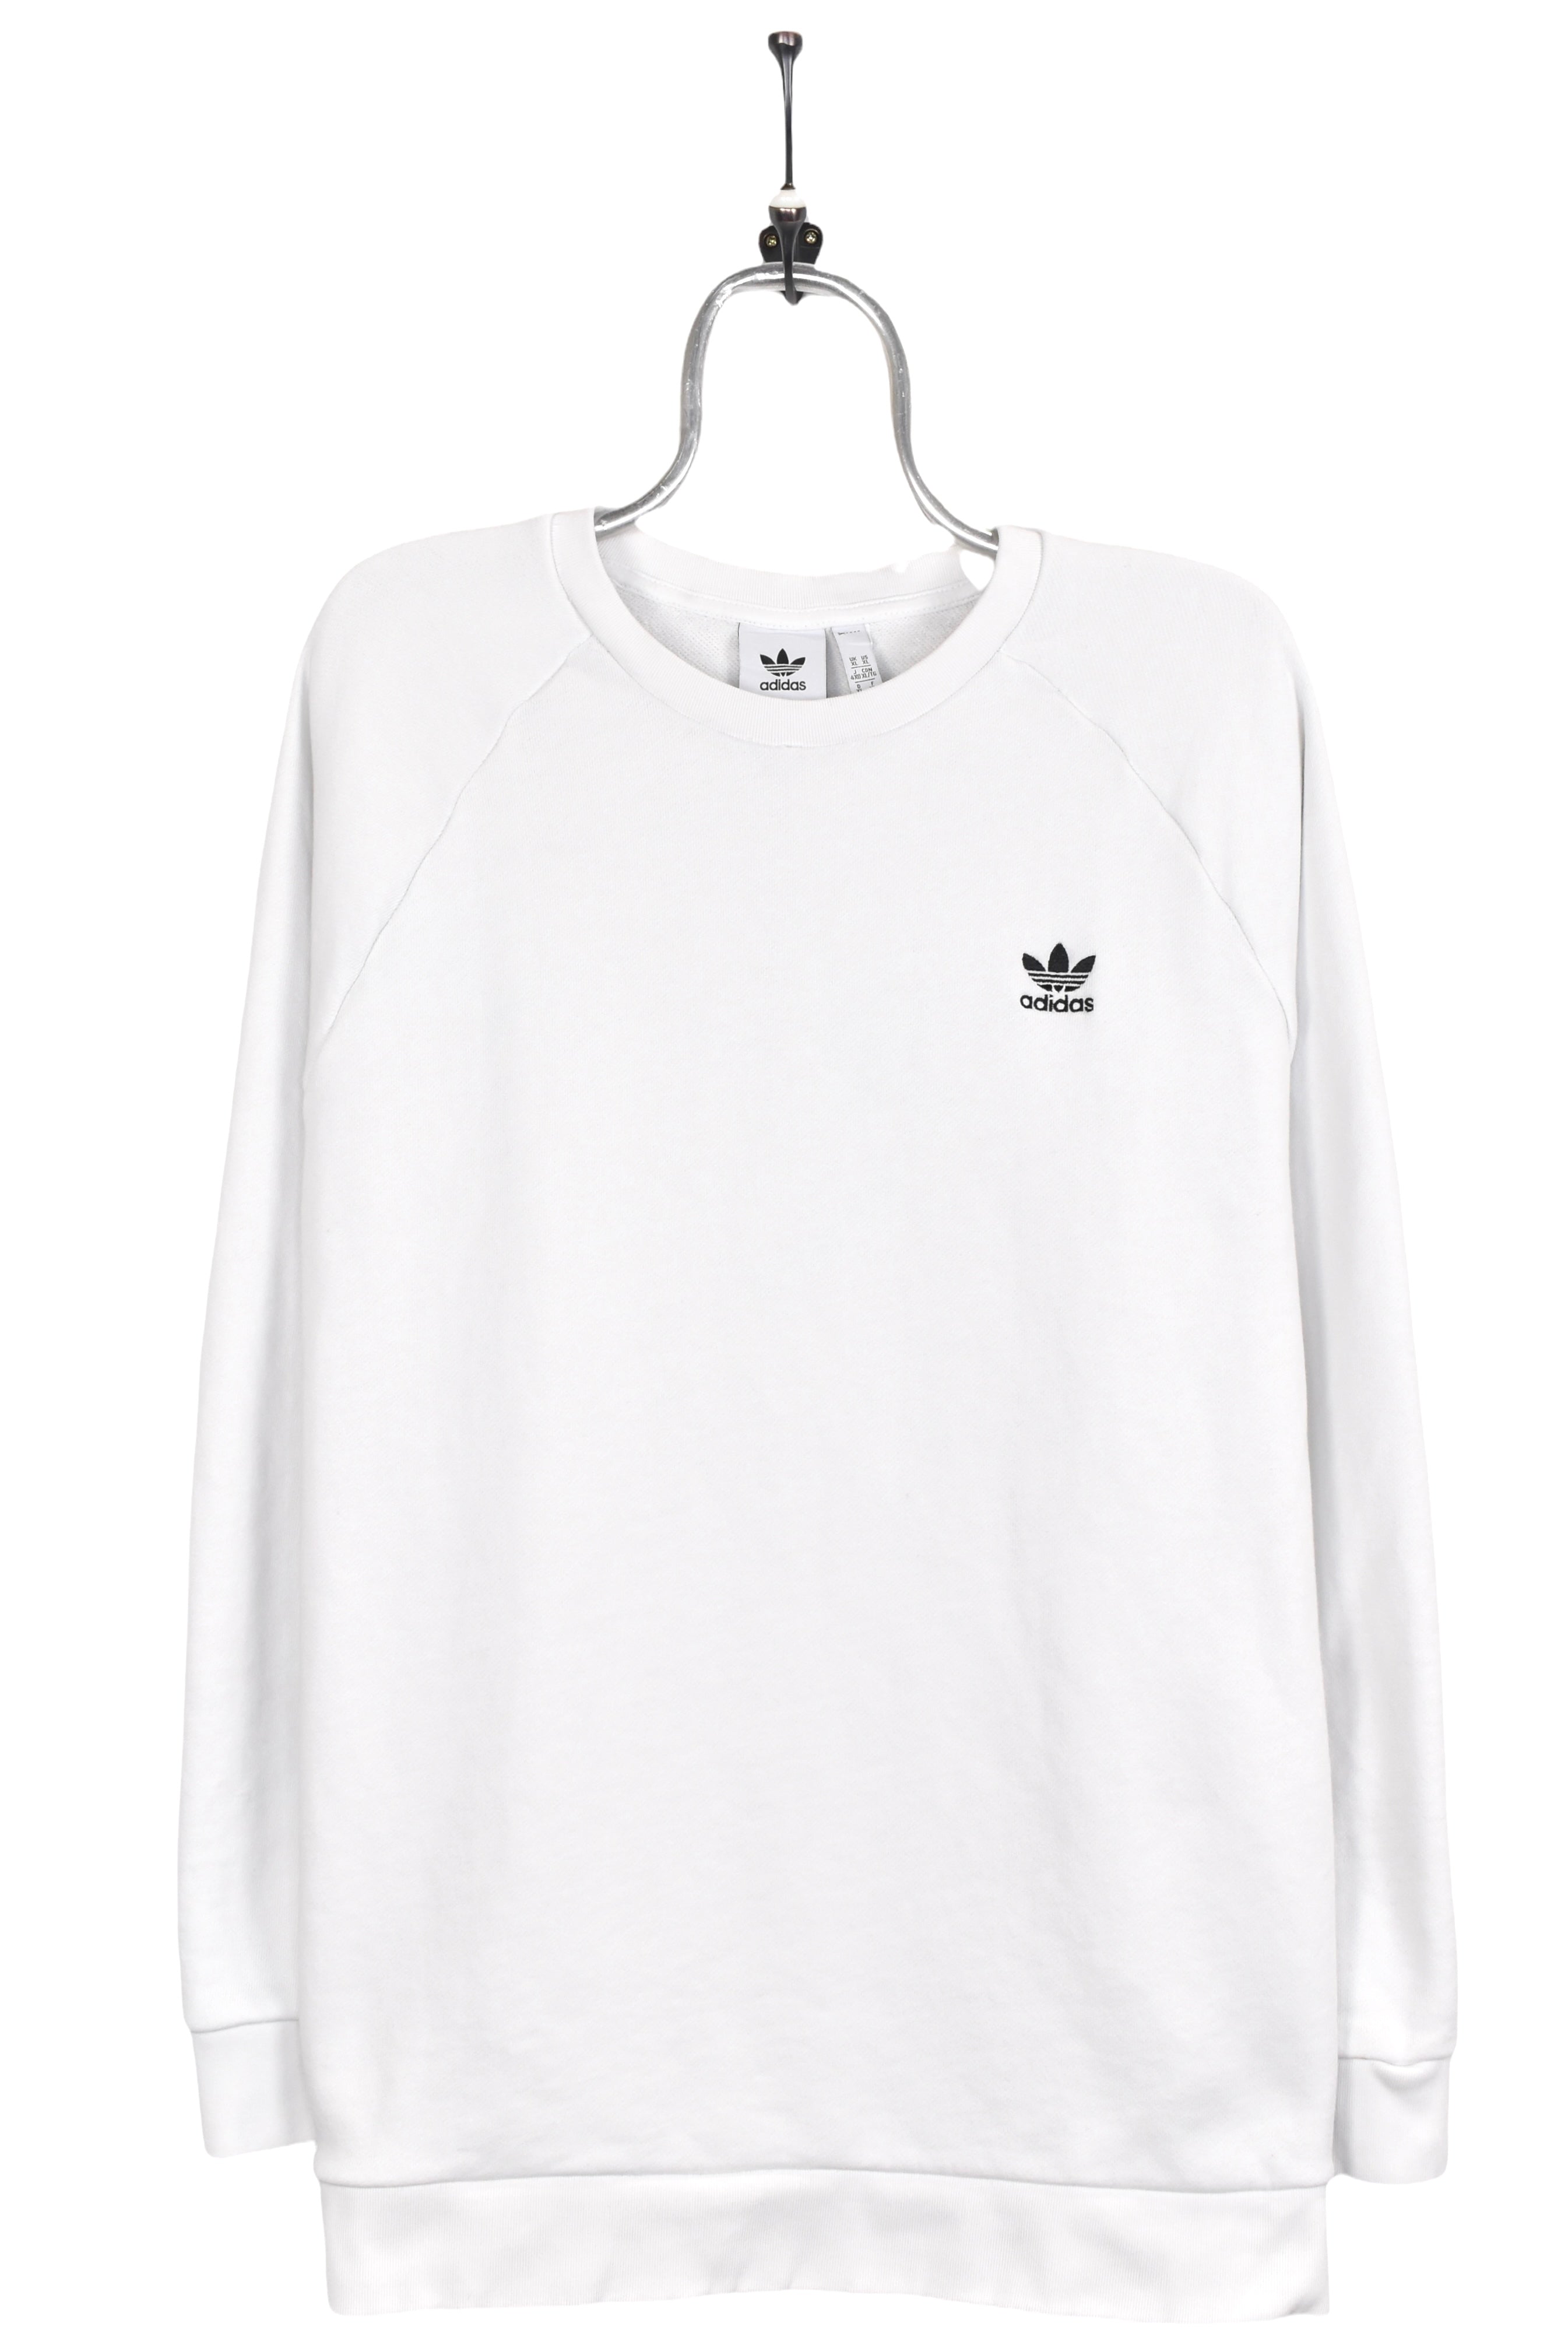 Vintage Adidas sweatshirt, white embroidered crewneck - AU XL ADIDAS